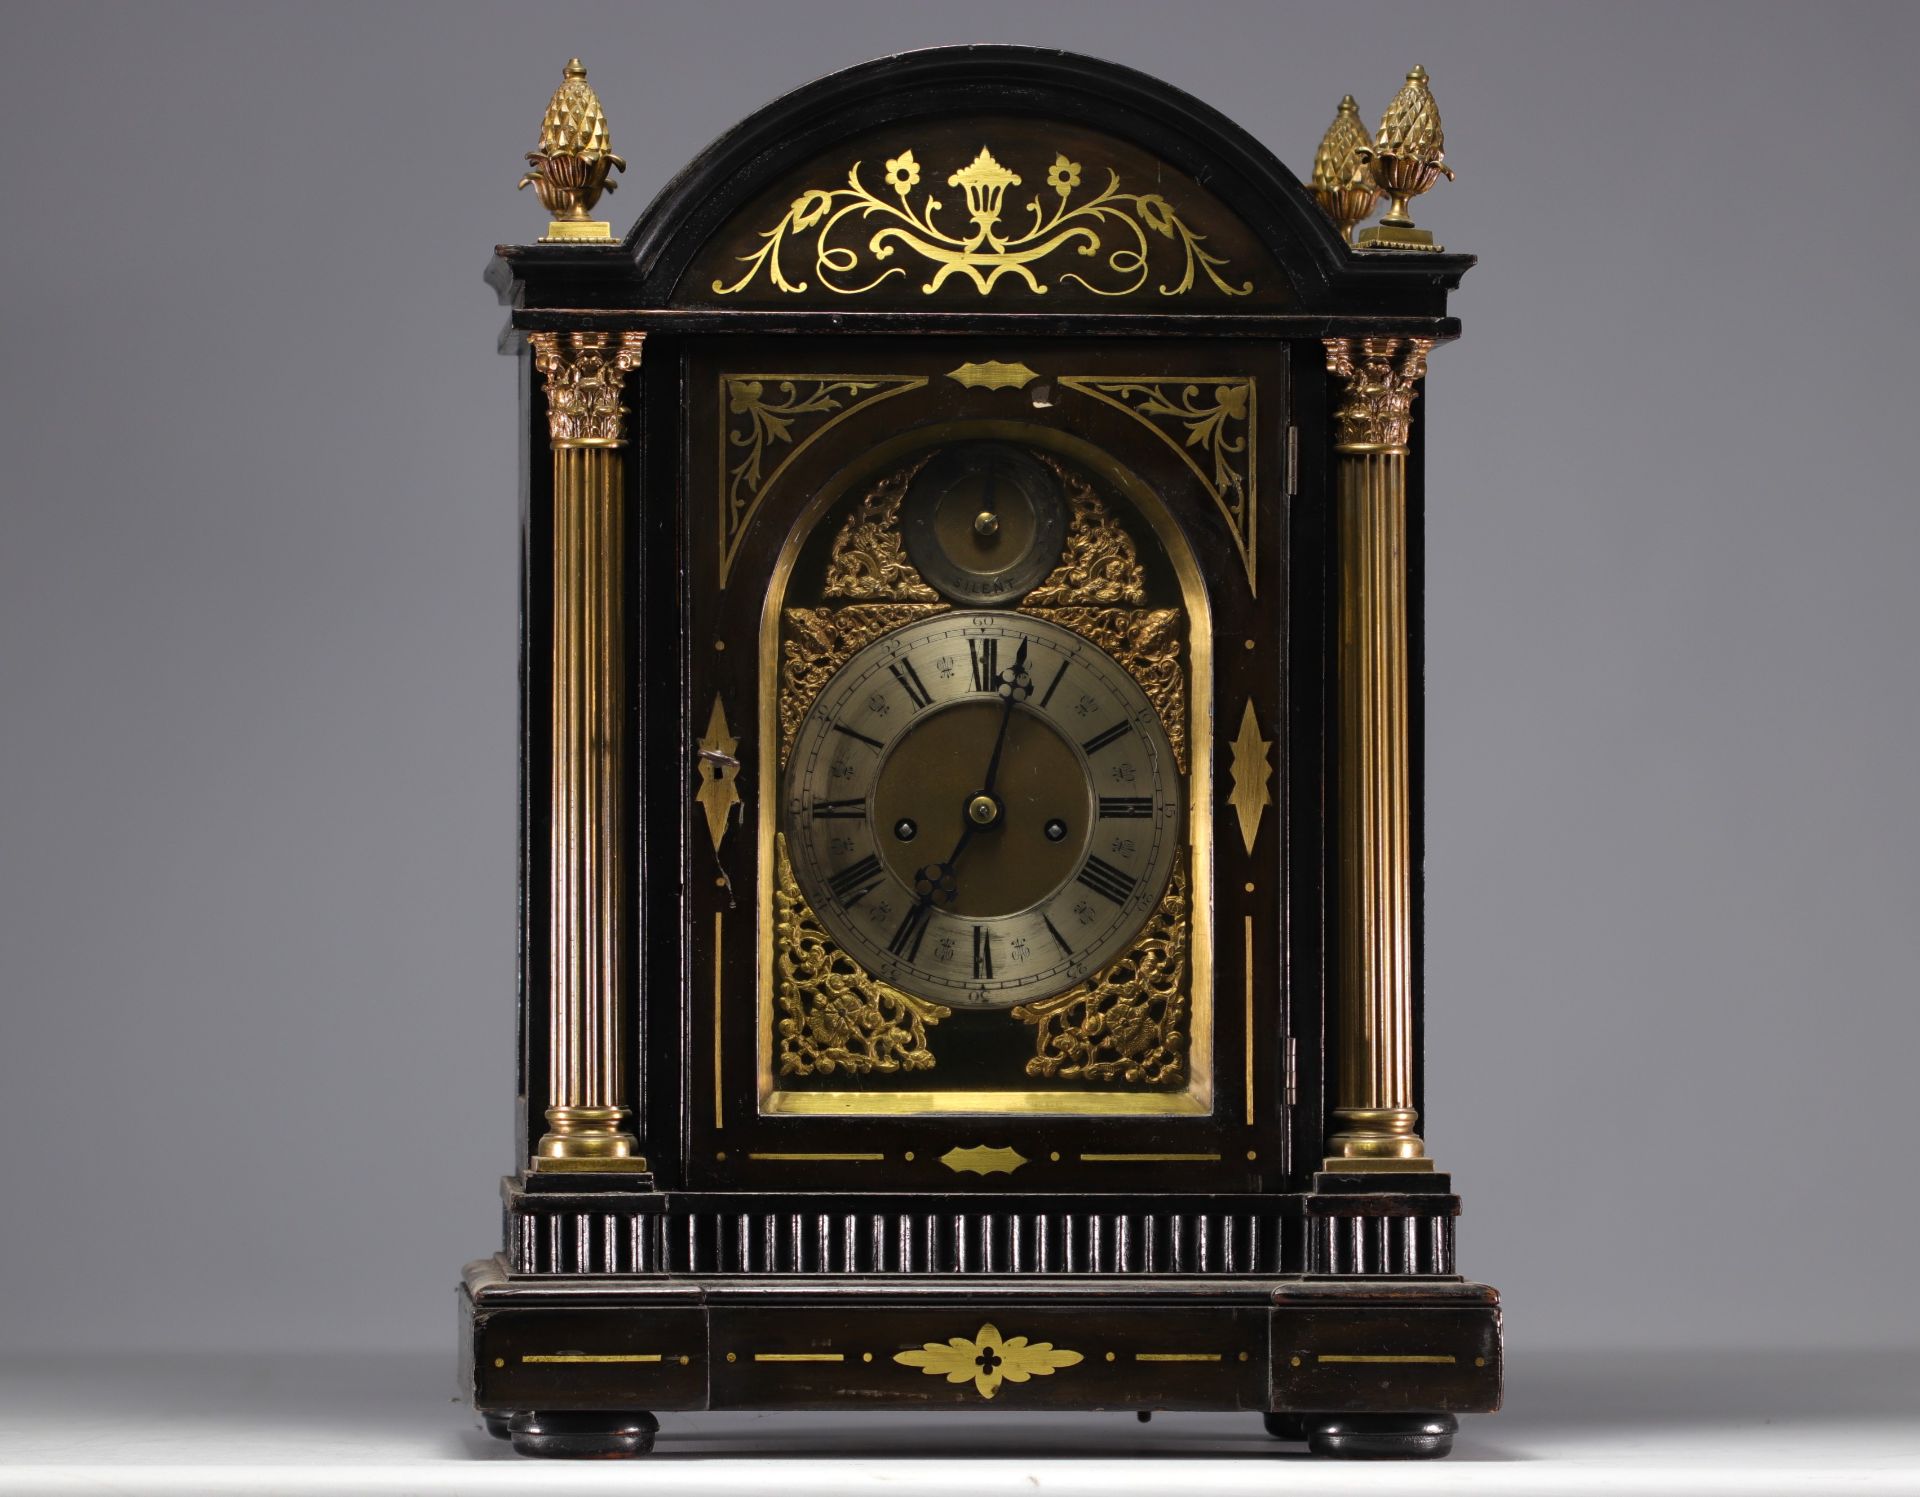 Mantel clock with striking mechanism in veneered wood, bronze and brass, 18th century.